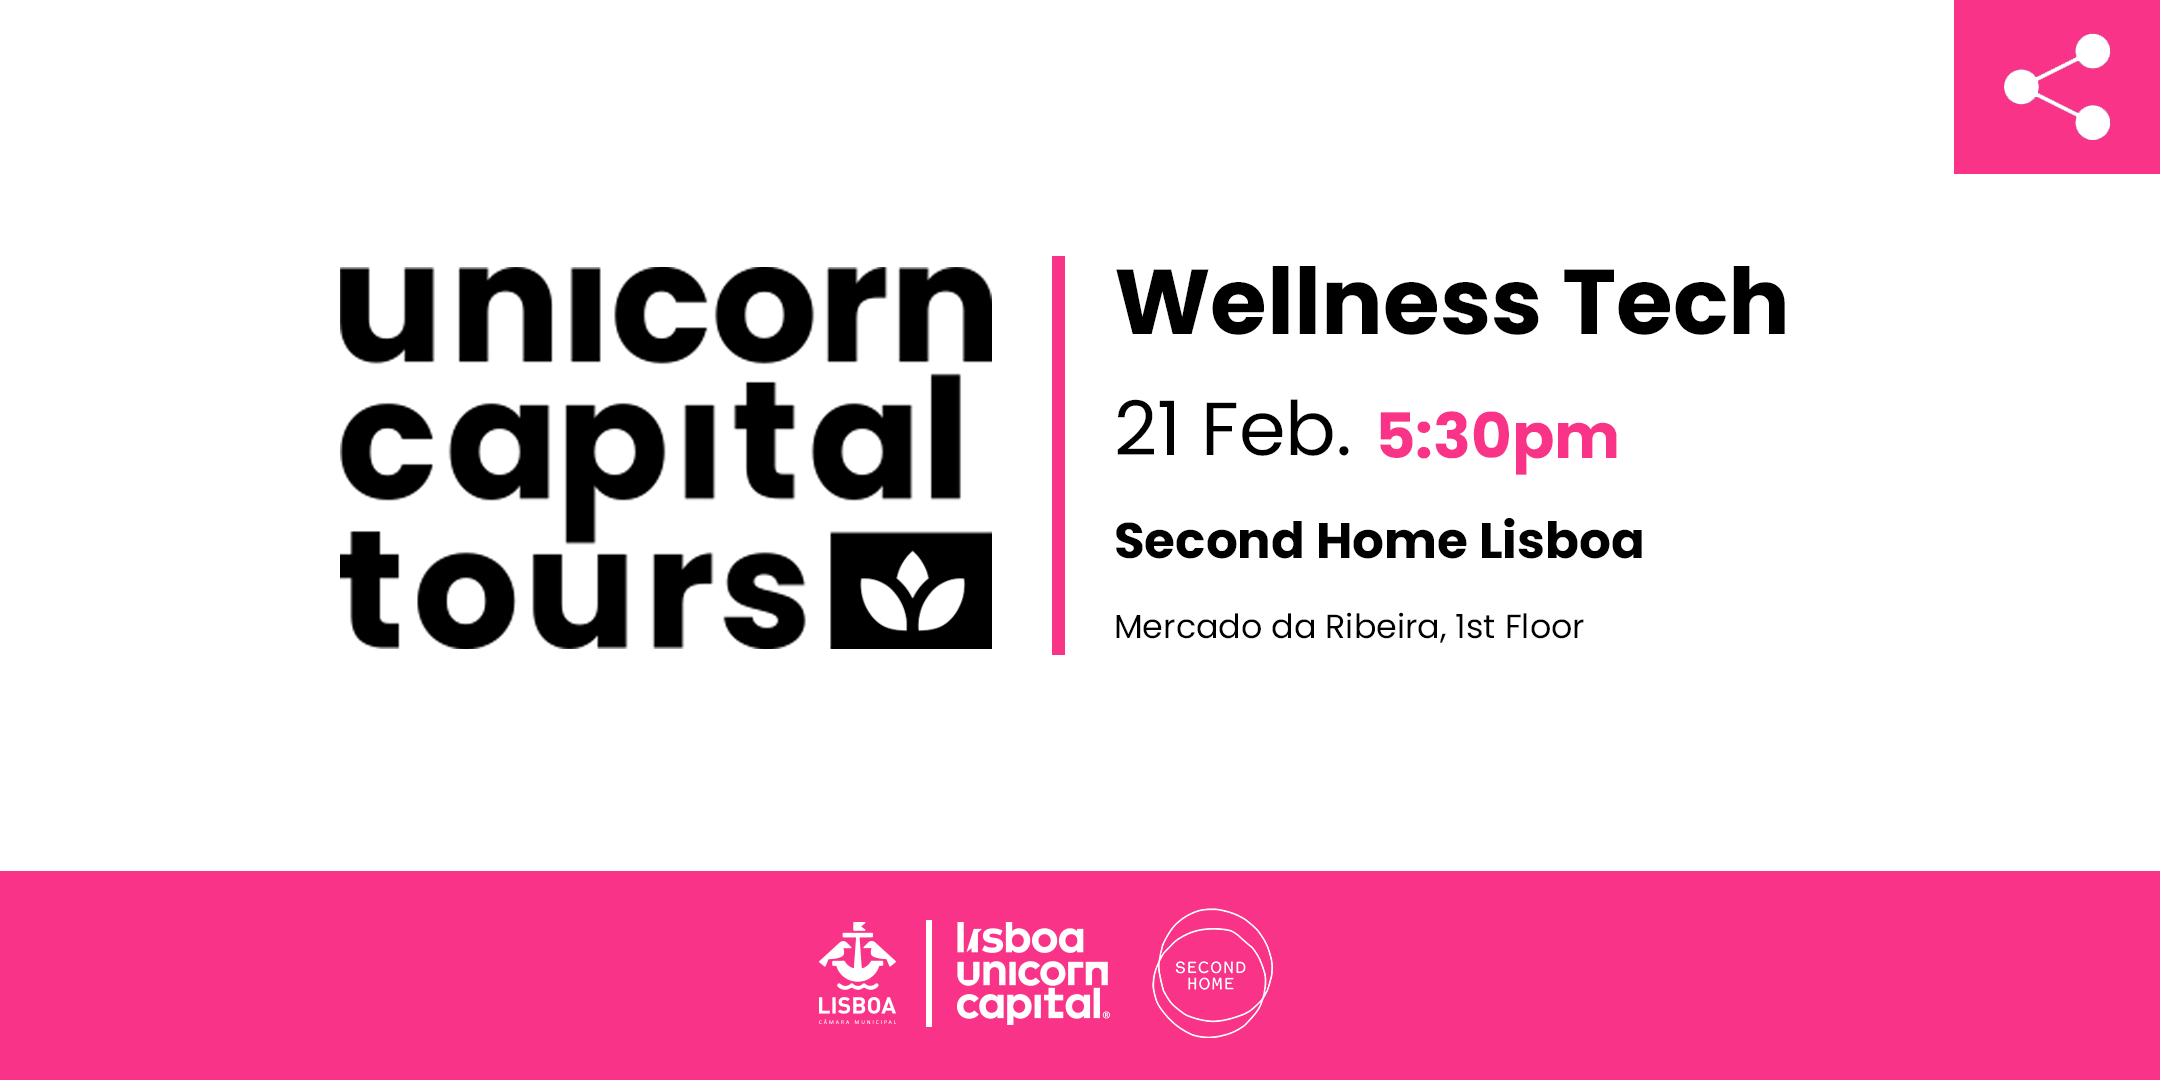 Unicorn Capital Tours organises tour dedicated to Wellness Tech in Lisboa